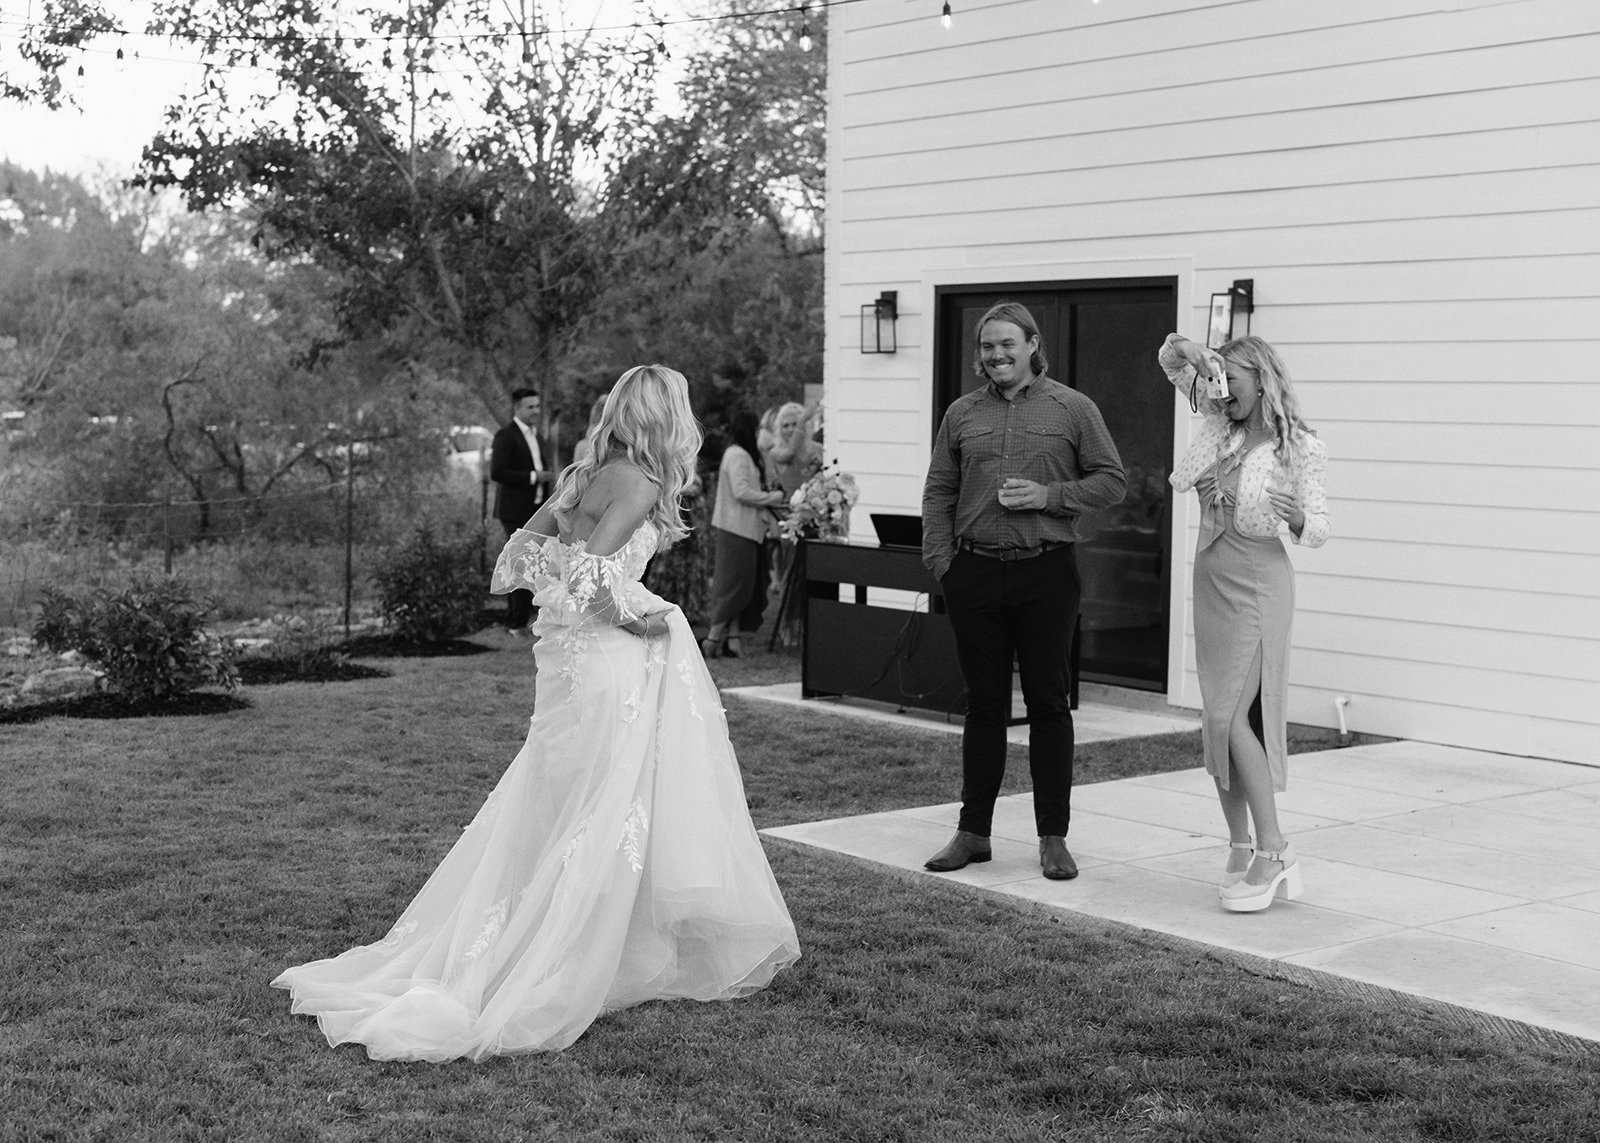 Best-Austin-Wedding-Photographers-Elopement-Film-35mm-Asheville-Santa-Barbara-Backyard-142.jpg